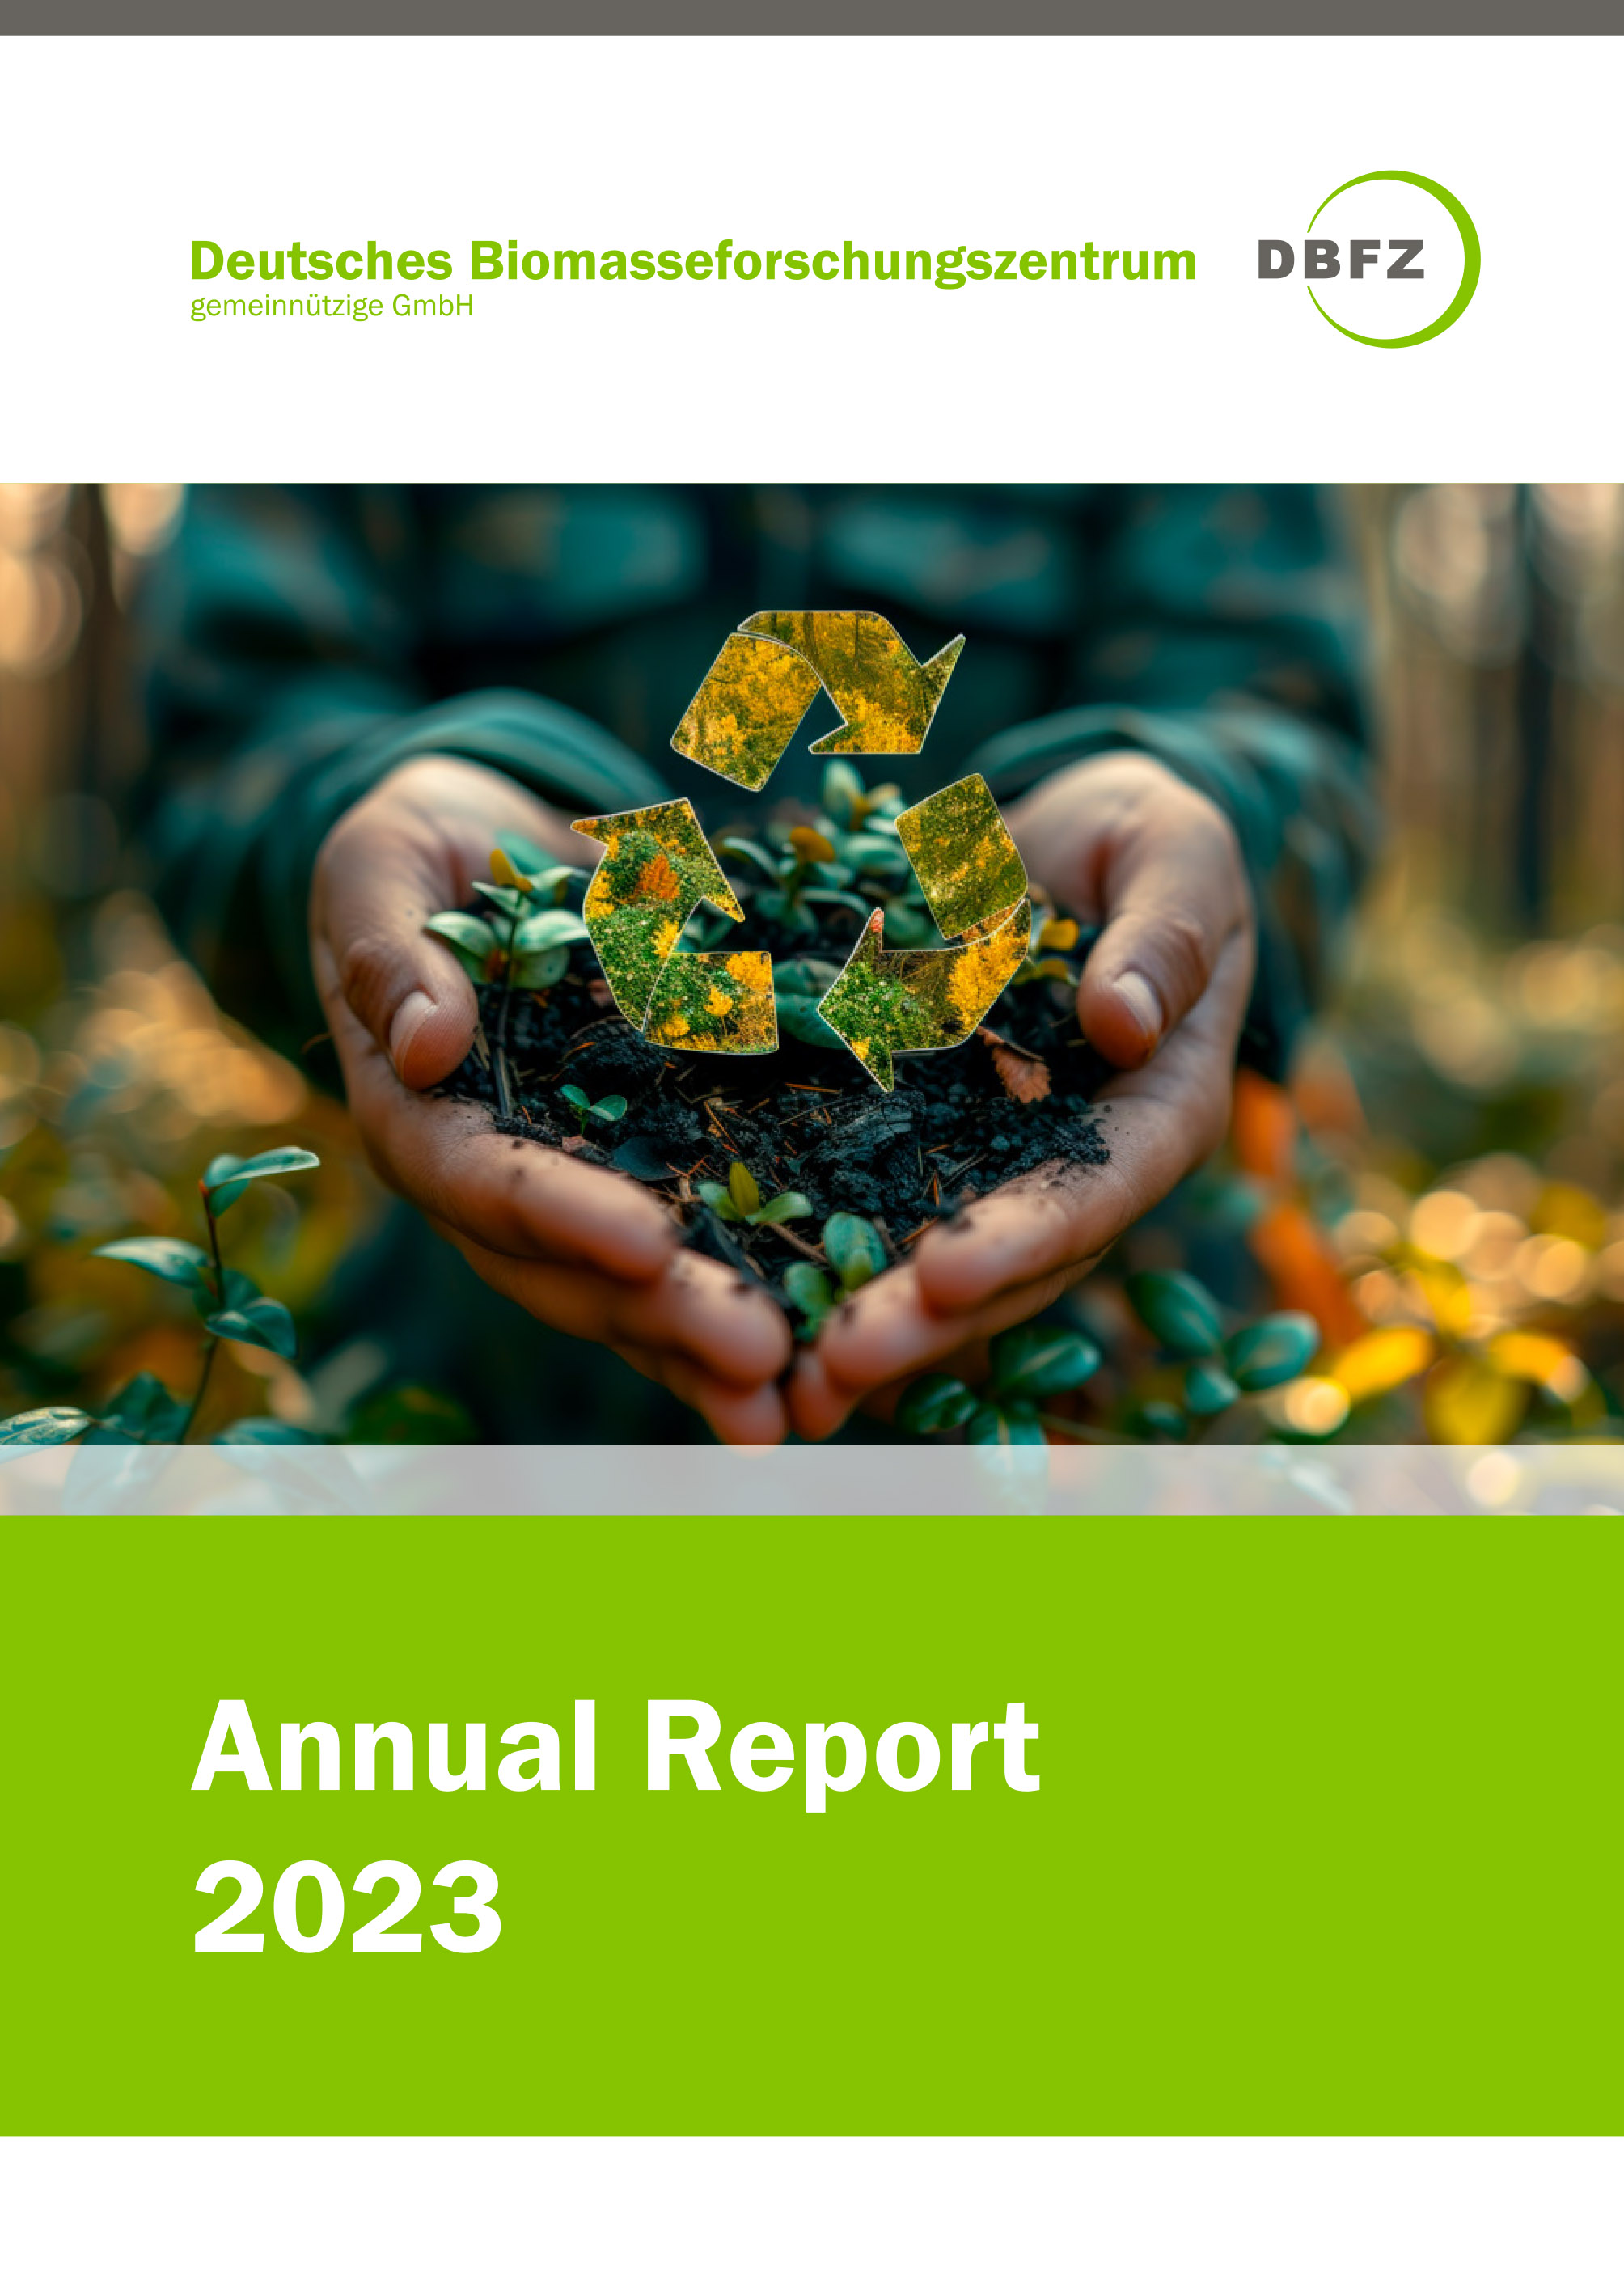 DBFZ Annual Report 2023 (17 MB)